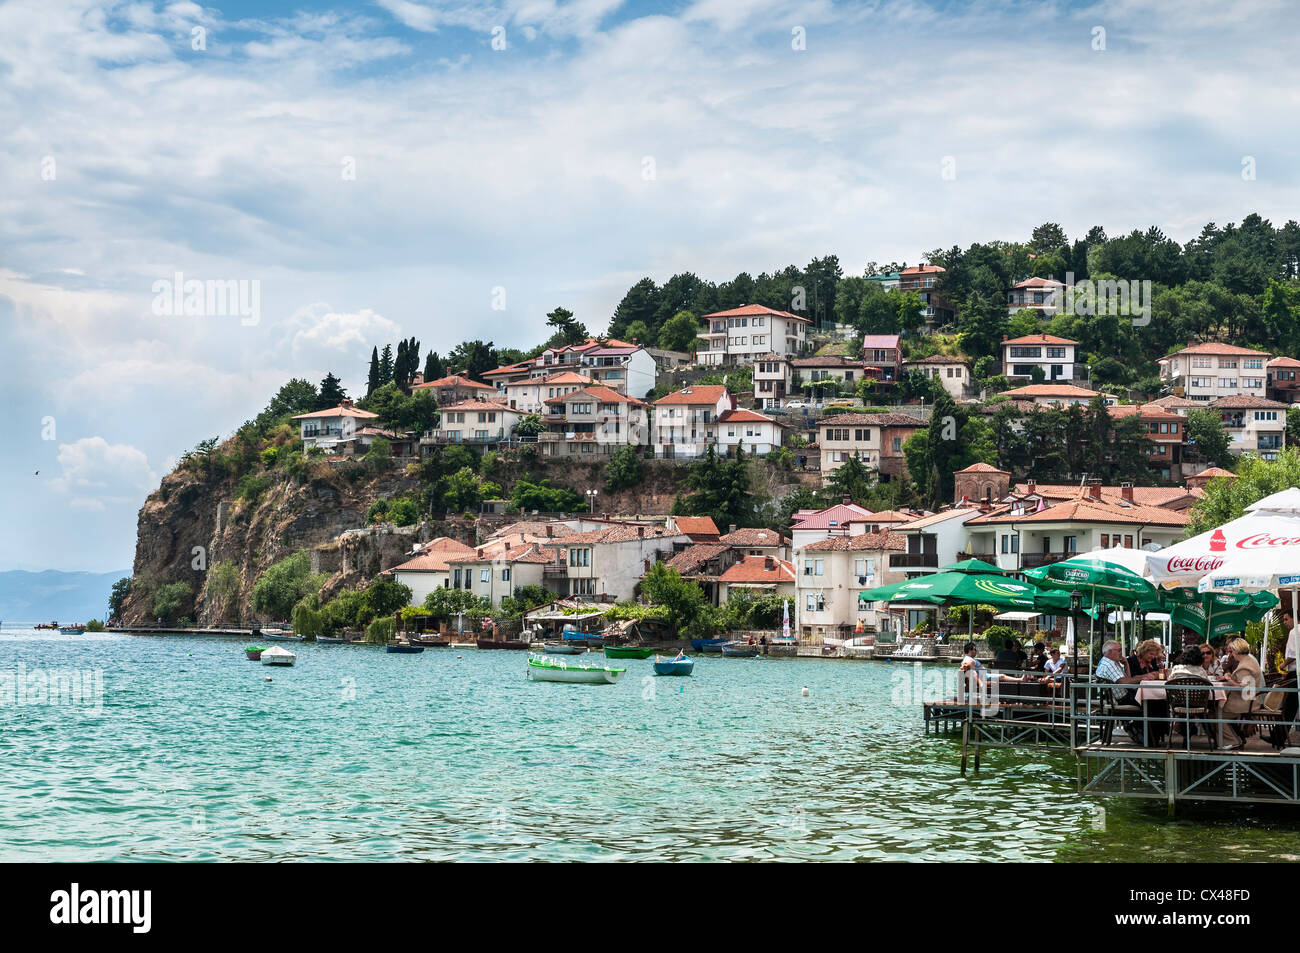 Die Stadt Ohrid, UNESCO-Weltkulturerbe am See Ohrid, Mazedonien, ehemalige jugoslawische Republik Mazedonien, ehemalige jugoslawische Republik Mazedonien. Stockfoto